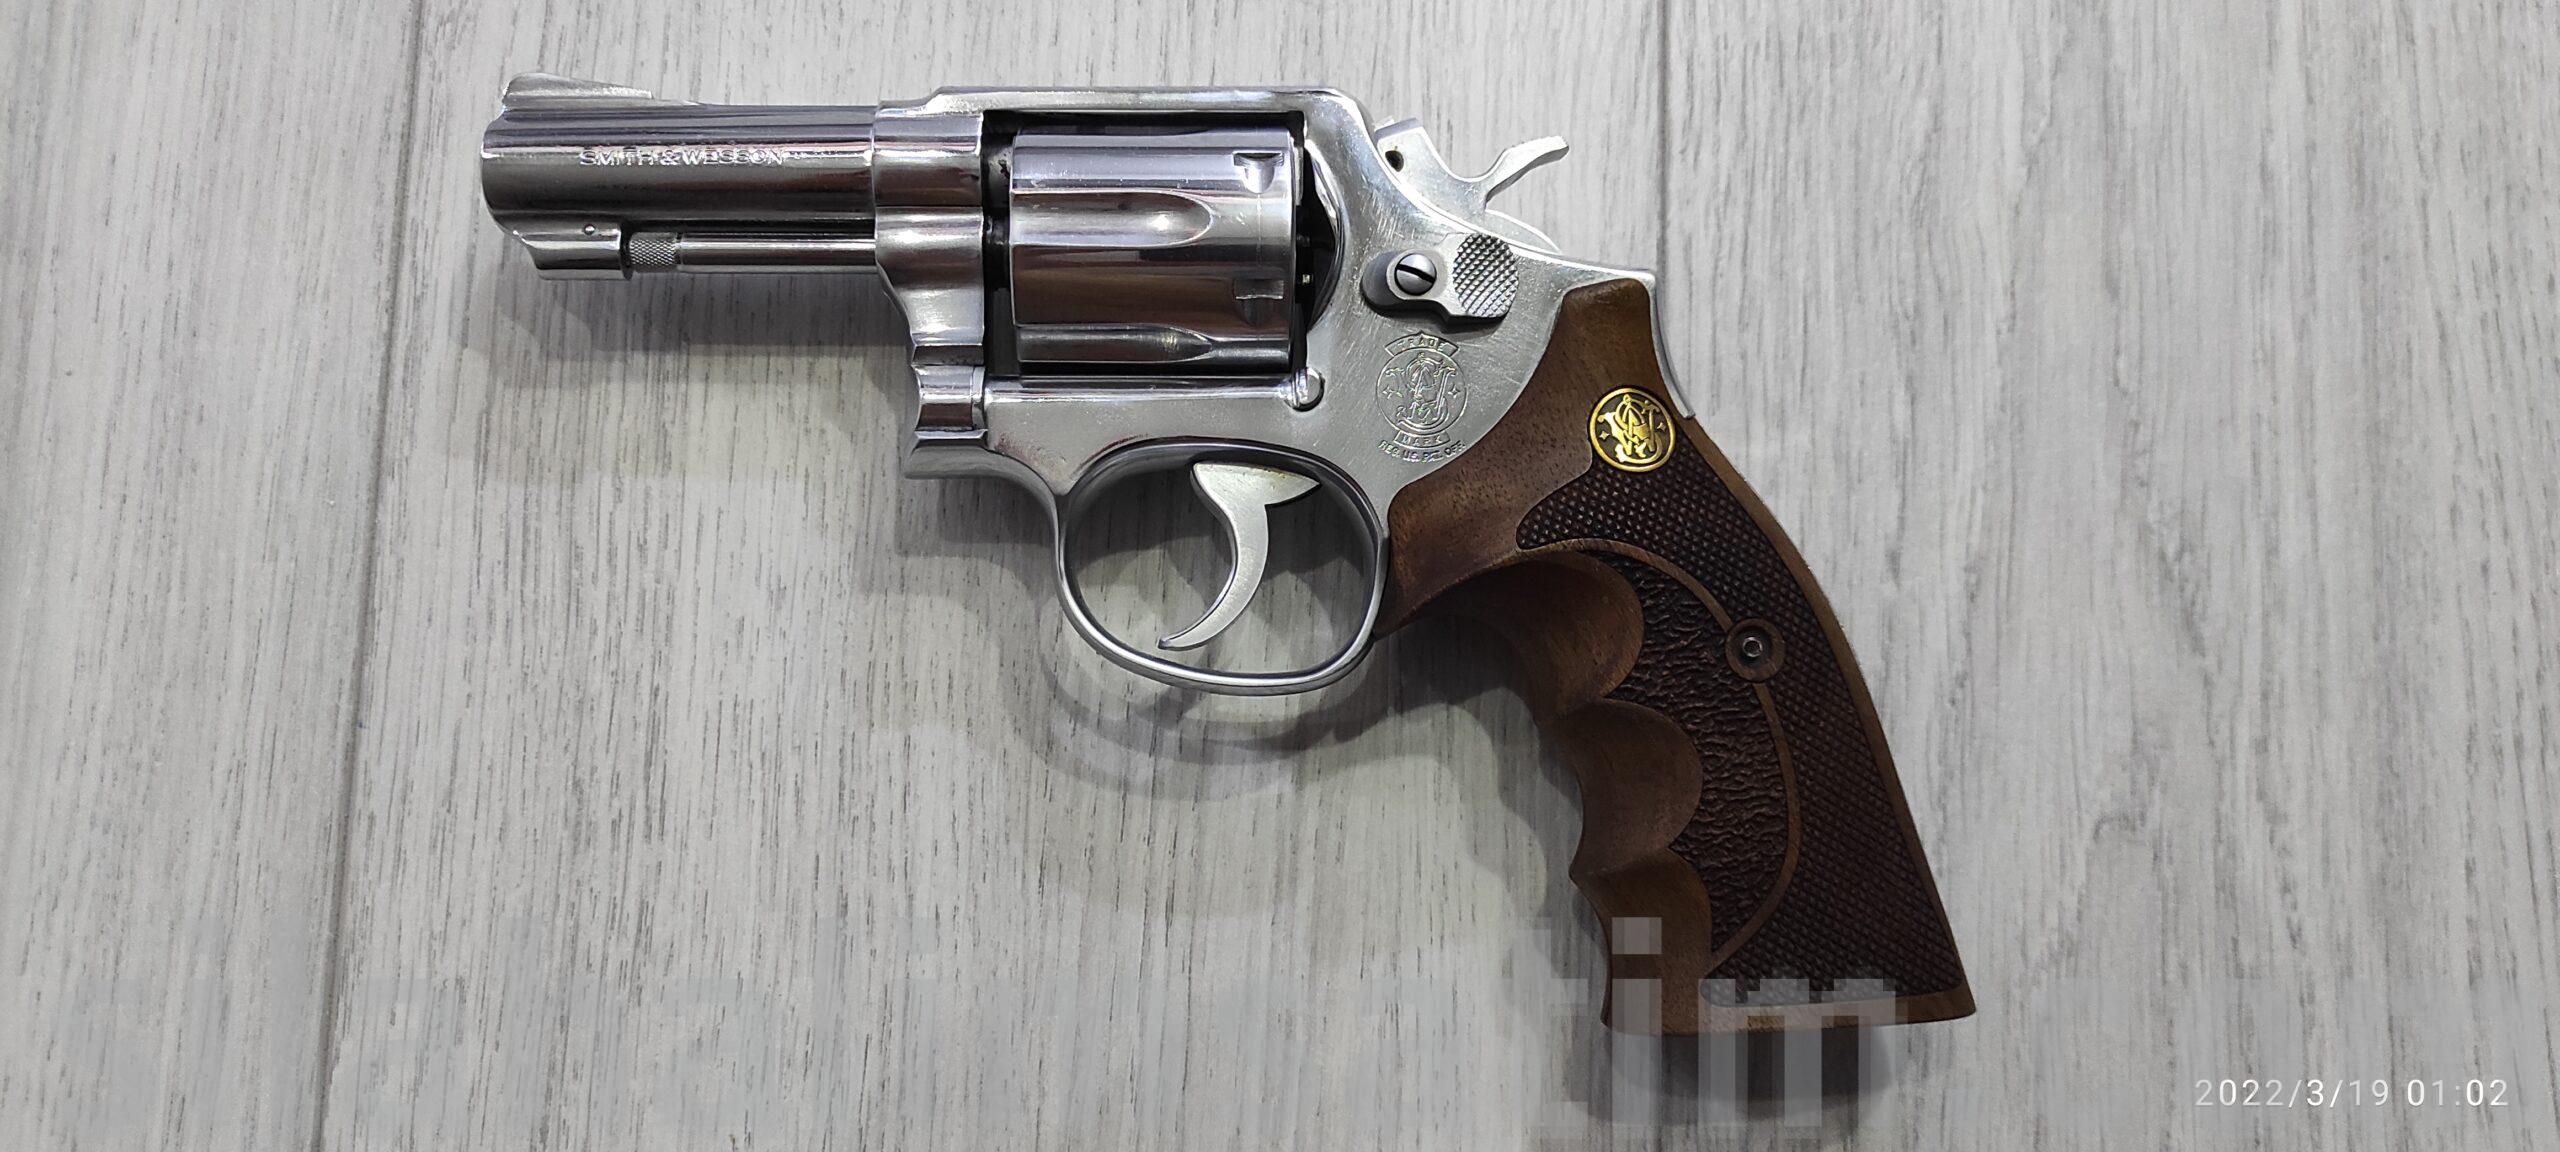 Tertemiz orjinal amerikan revolver